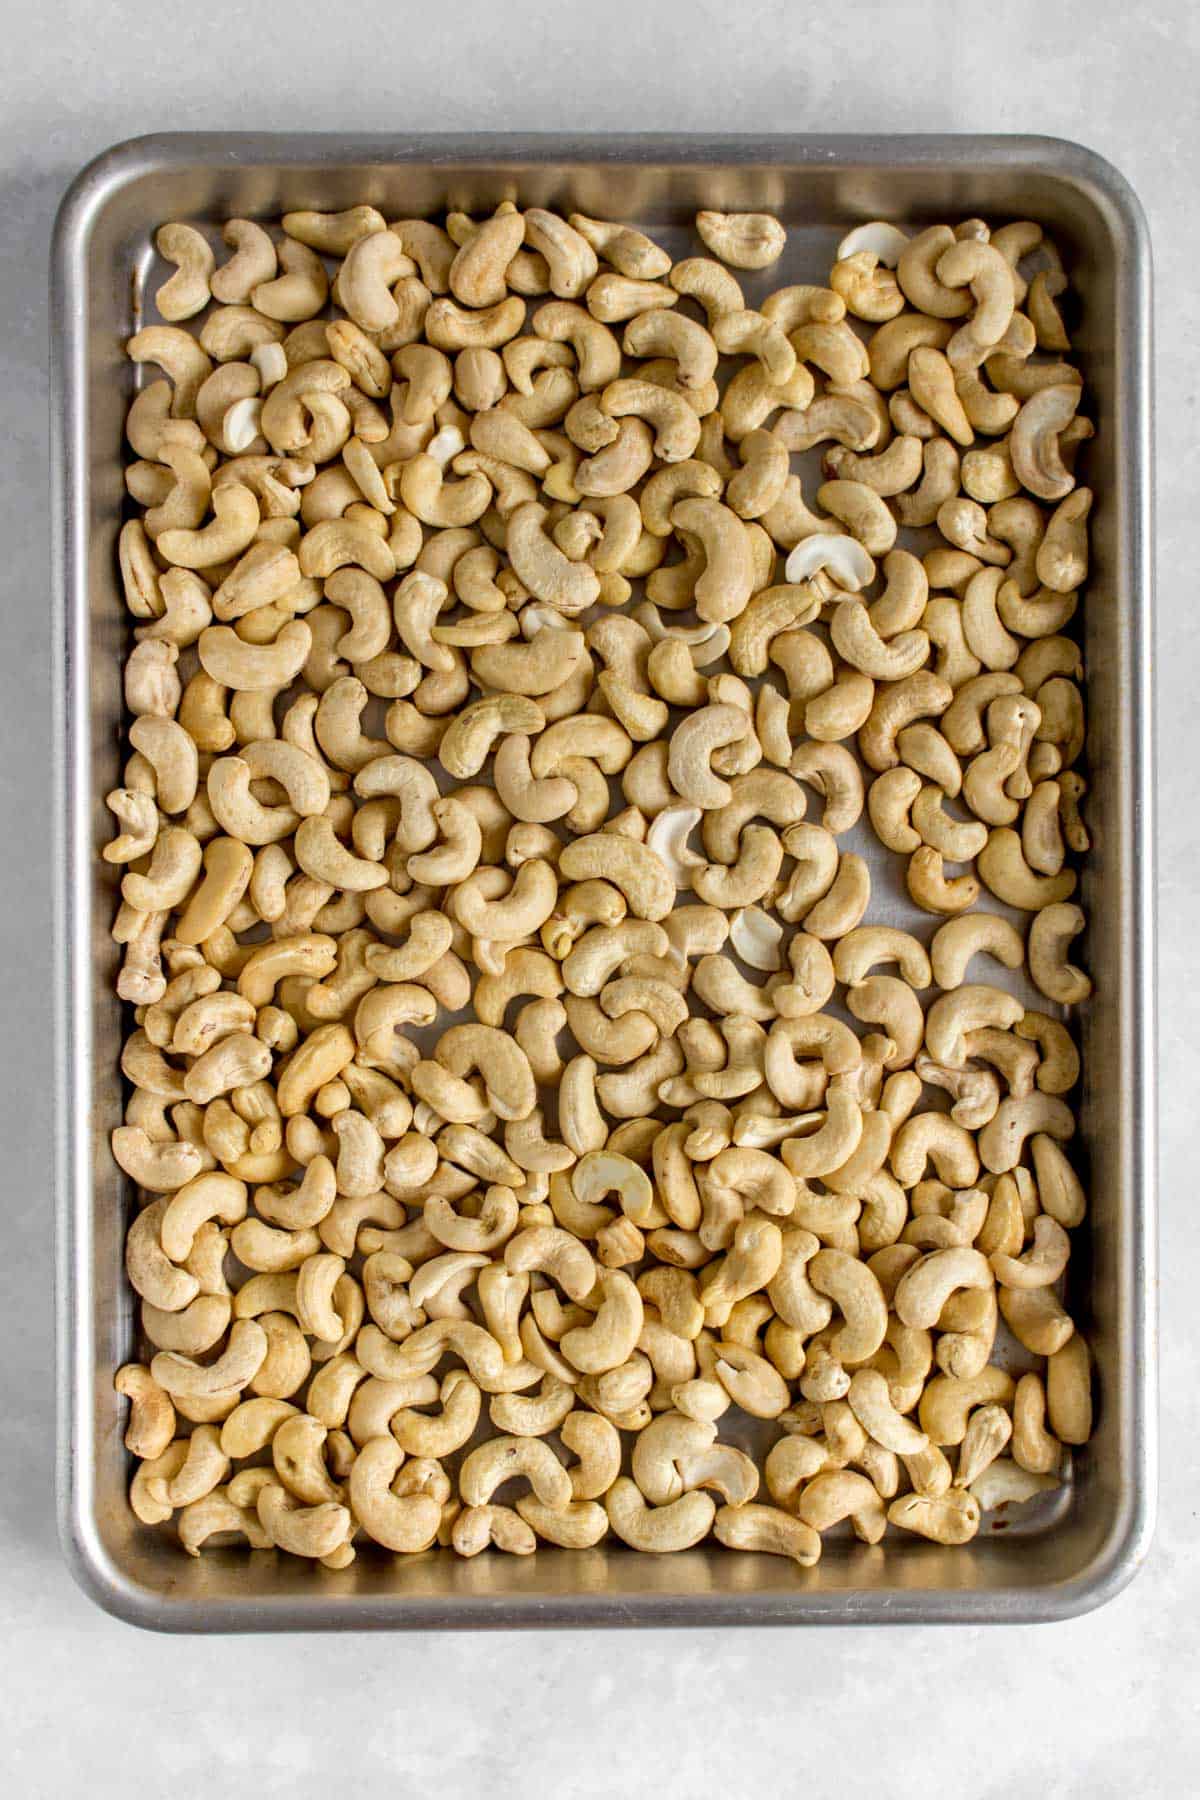 Sheet pan with raw cashews.